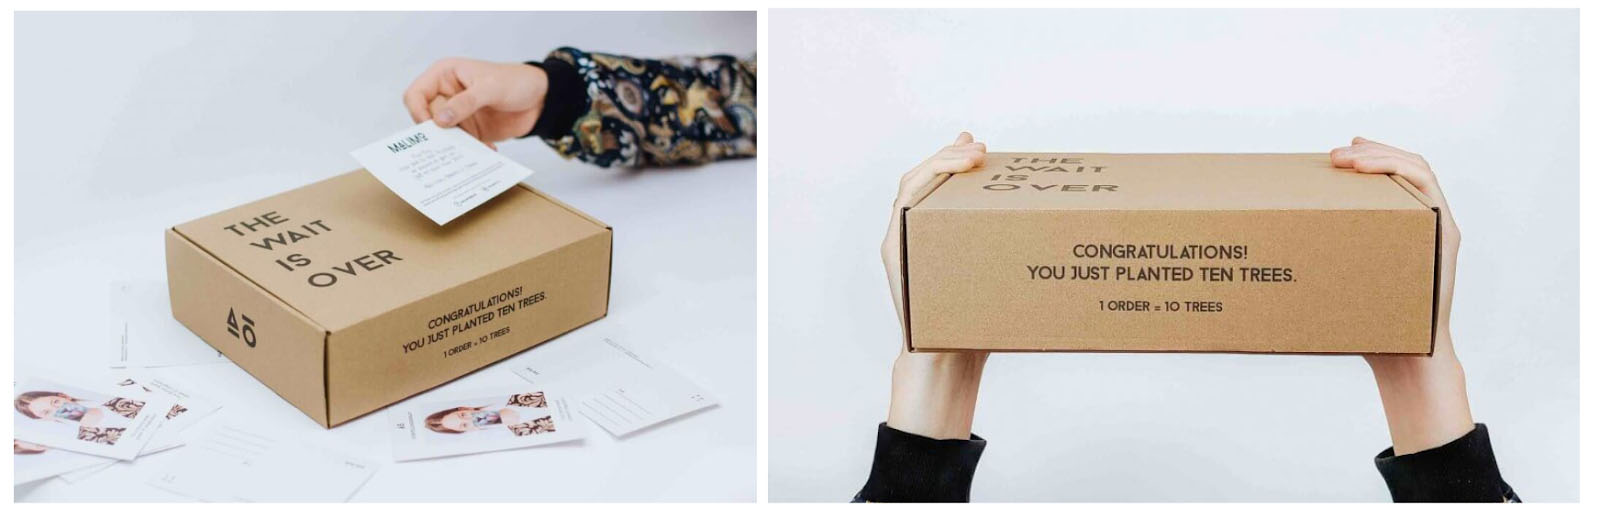 Malimo eco-friendly custom box with environmental campaign slogan.